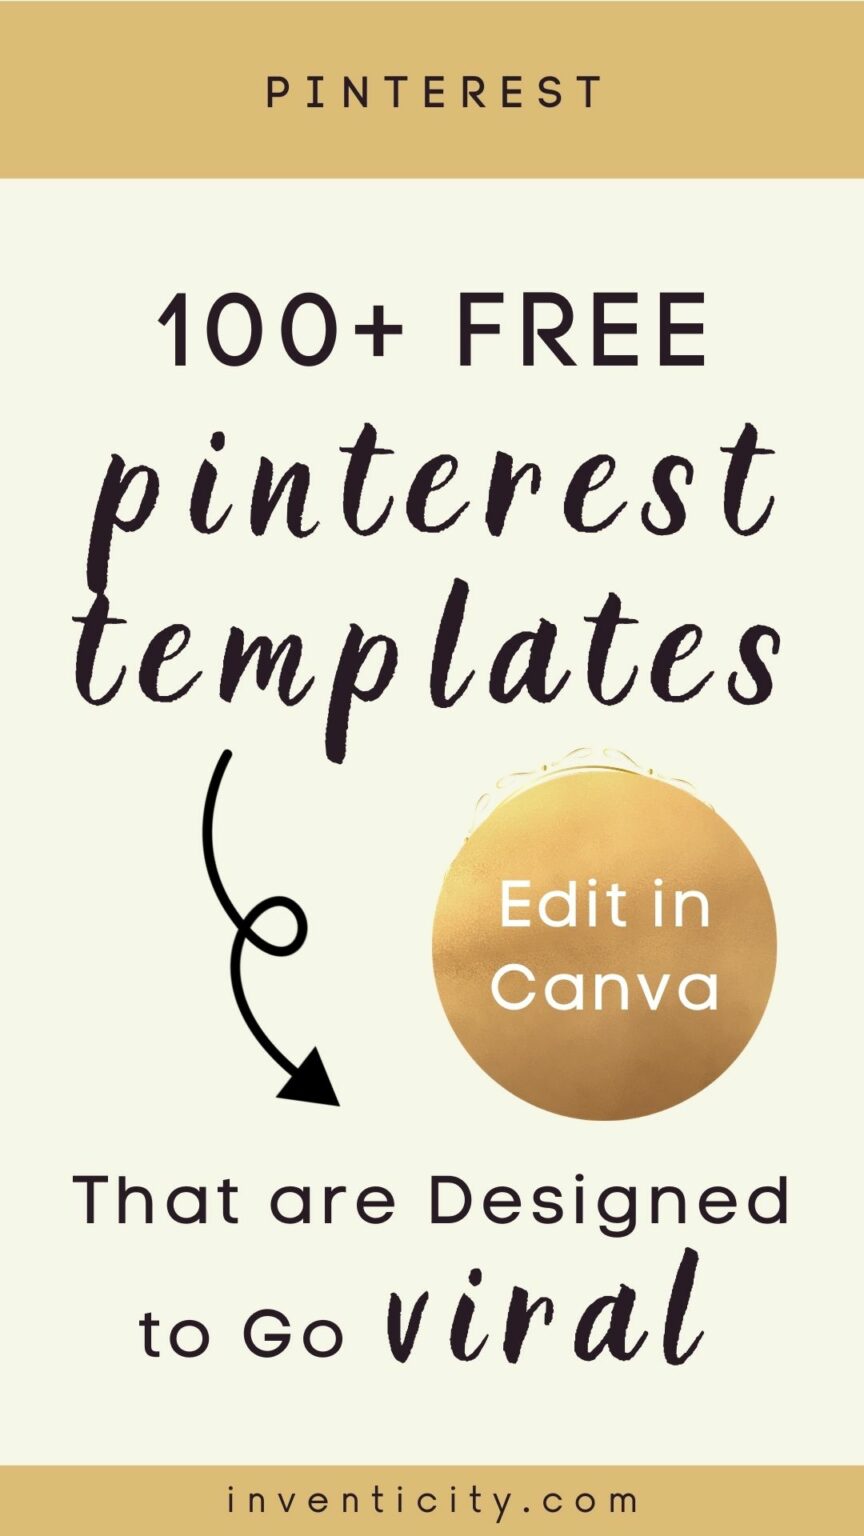 Pinterest Templates for Canva | Designed to Go Viral | CeciliaElise.com